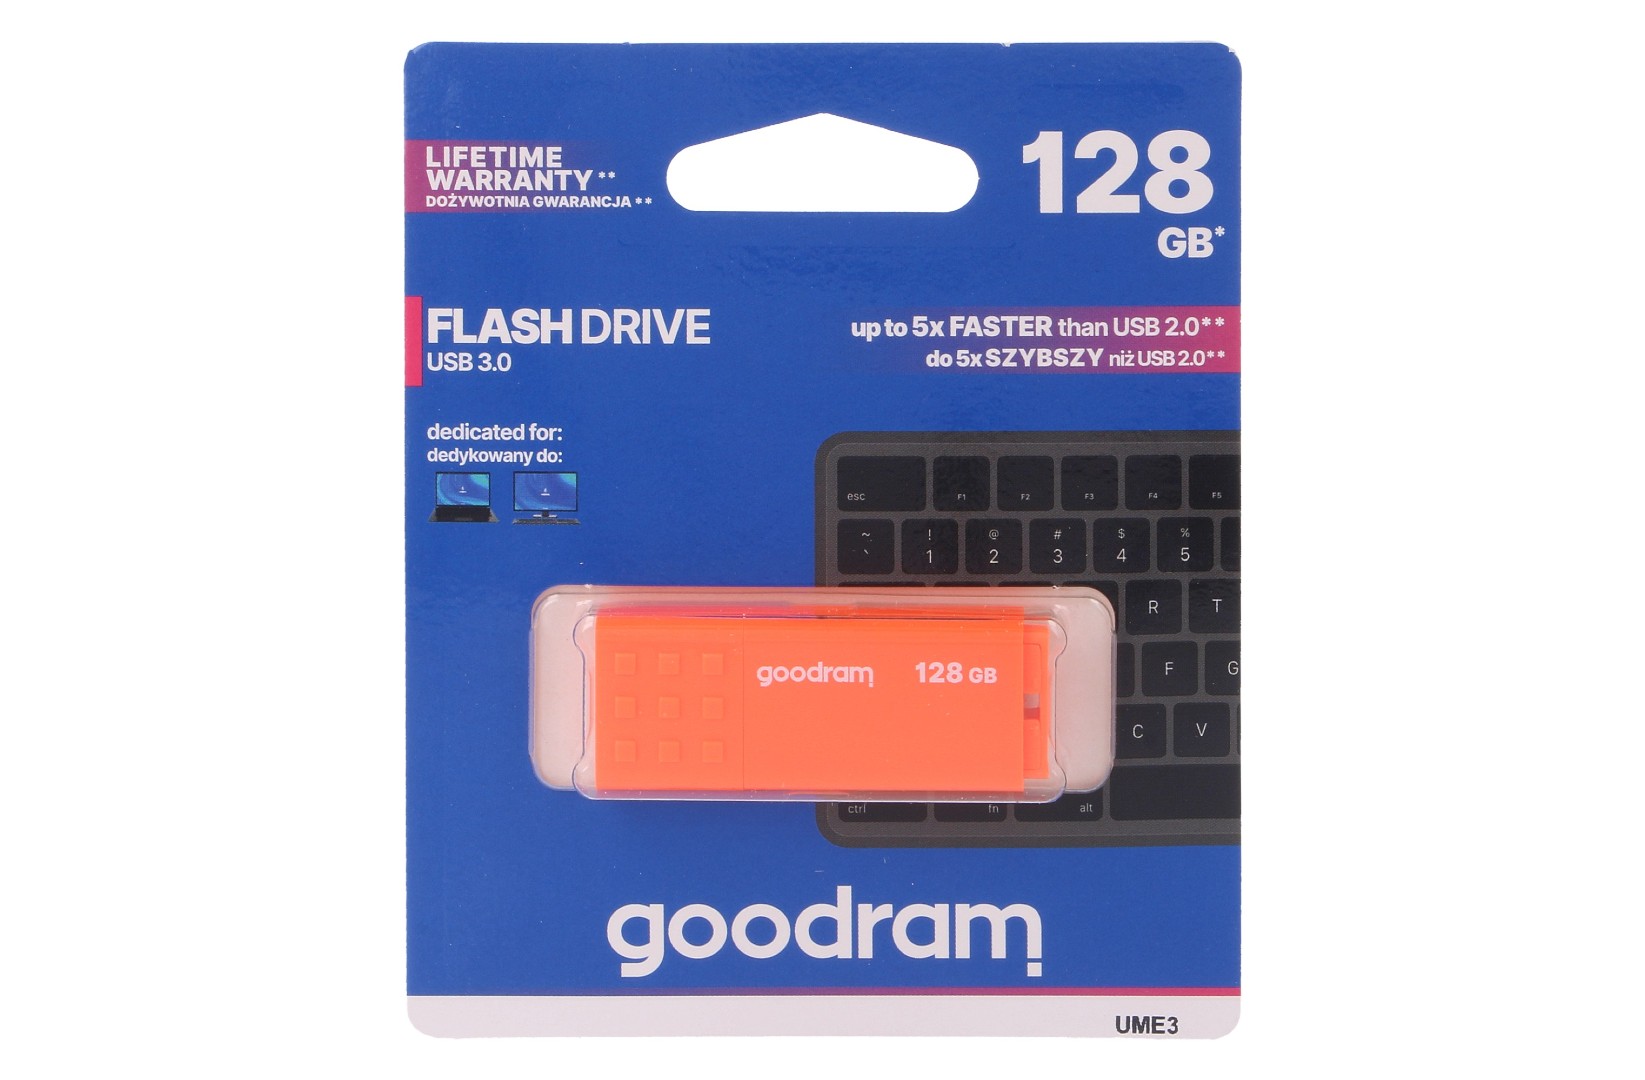 USB 2.0 & 3.0 flash drives by Goodram